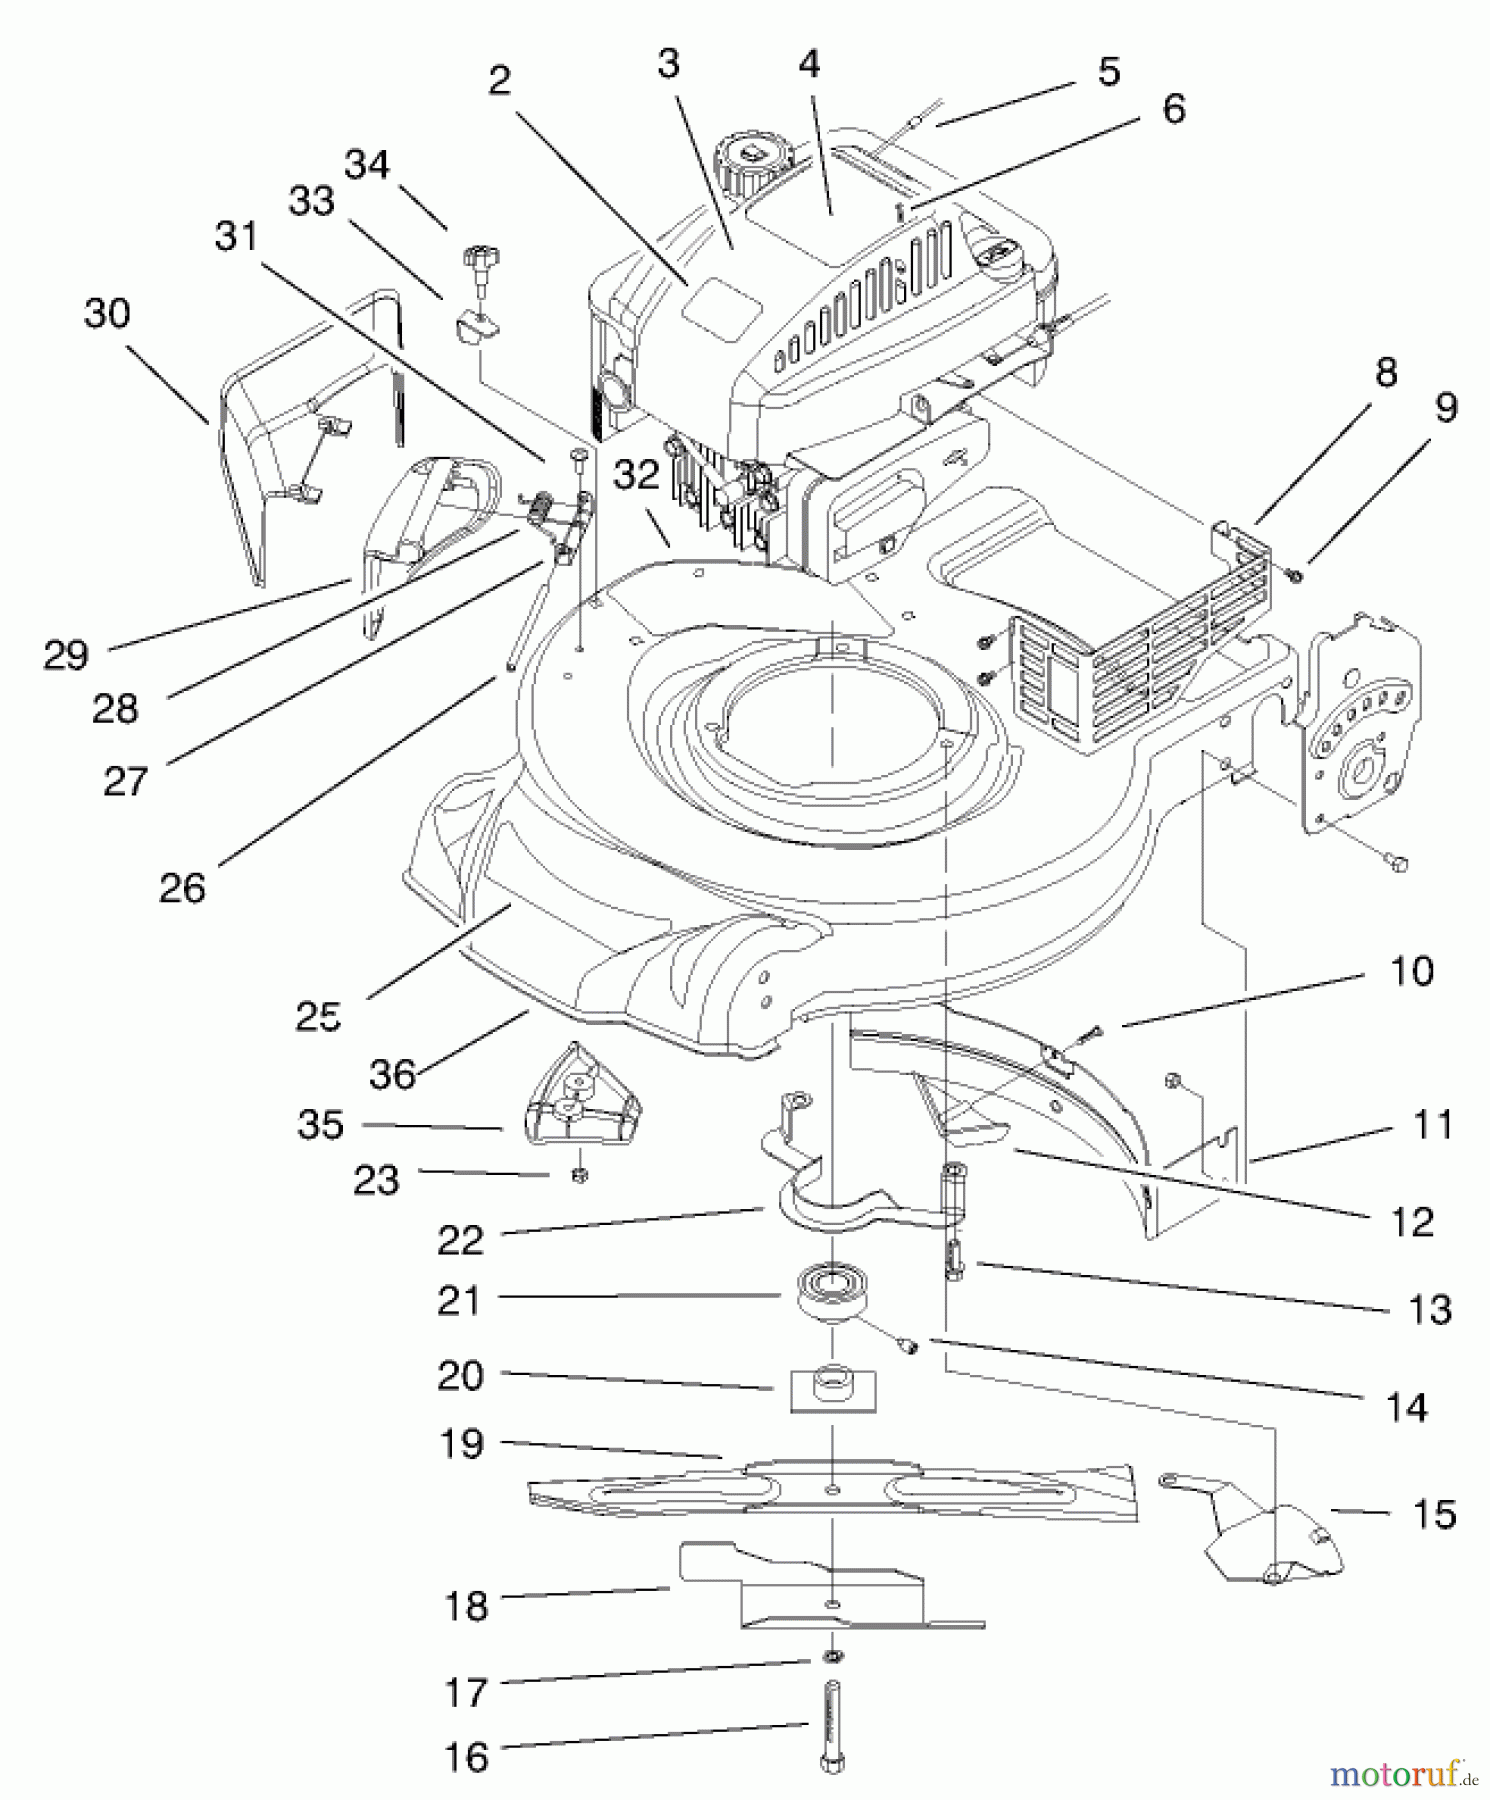  Toro Neu Mowers, Walk-Behind Seite 1 20022 (R-21S) - Toro Recycler Mower, R-21S, 1999 (9900001-9999999) ENGINE & BLADE ASSEMBLY